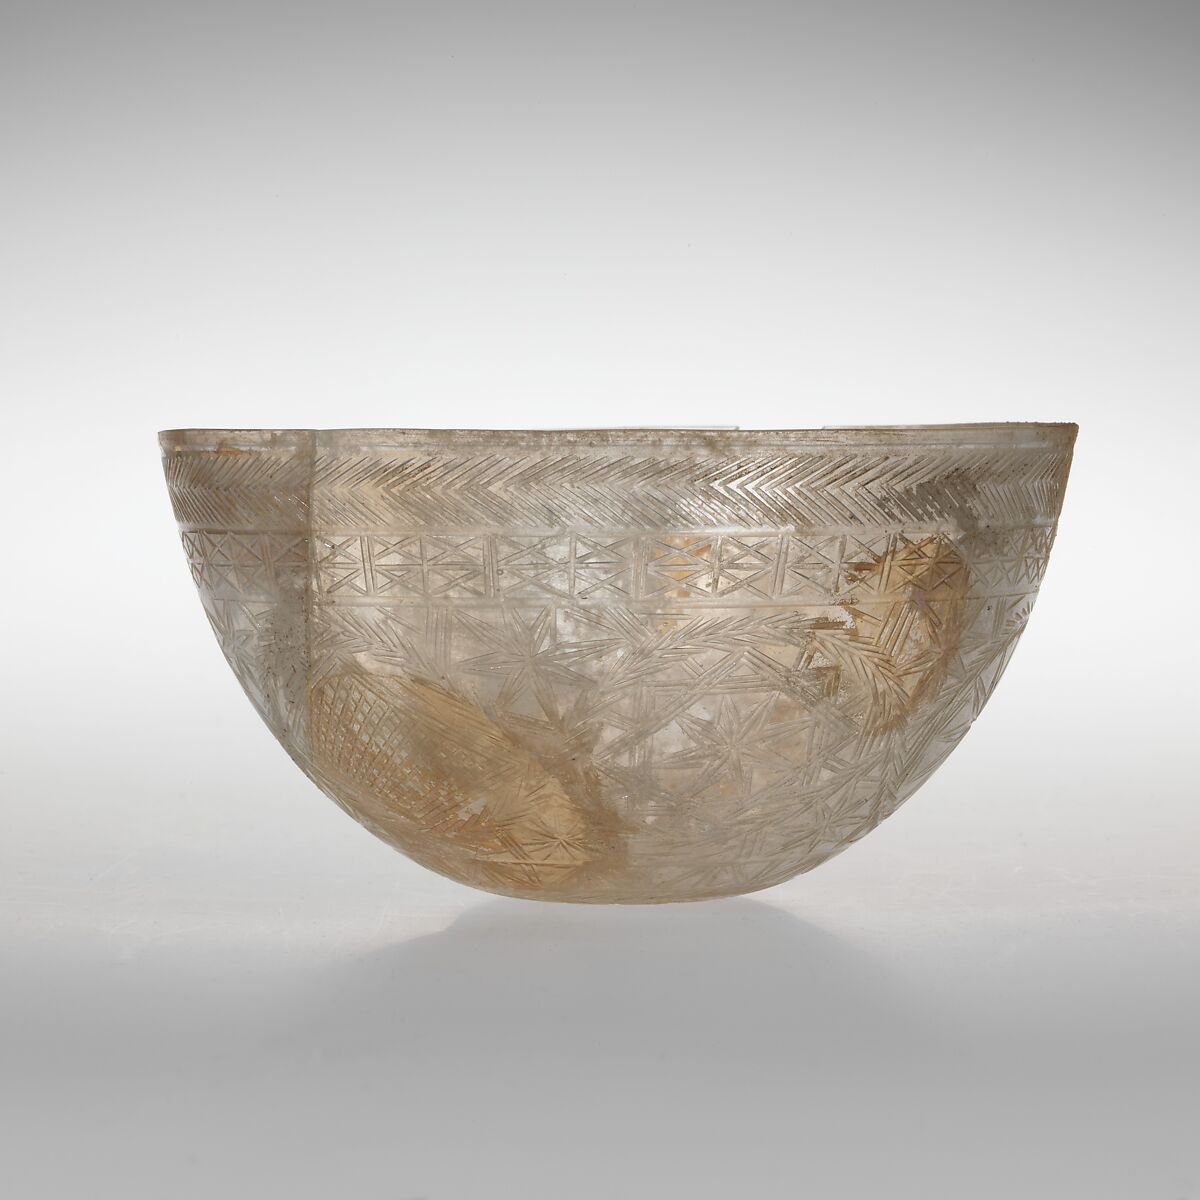 Glass bowl decorated with geometric patterns, Glass, Roman